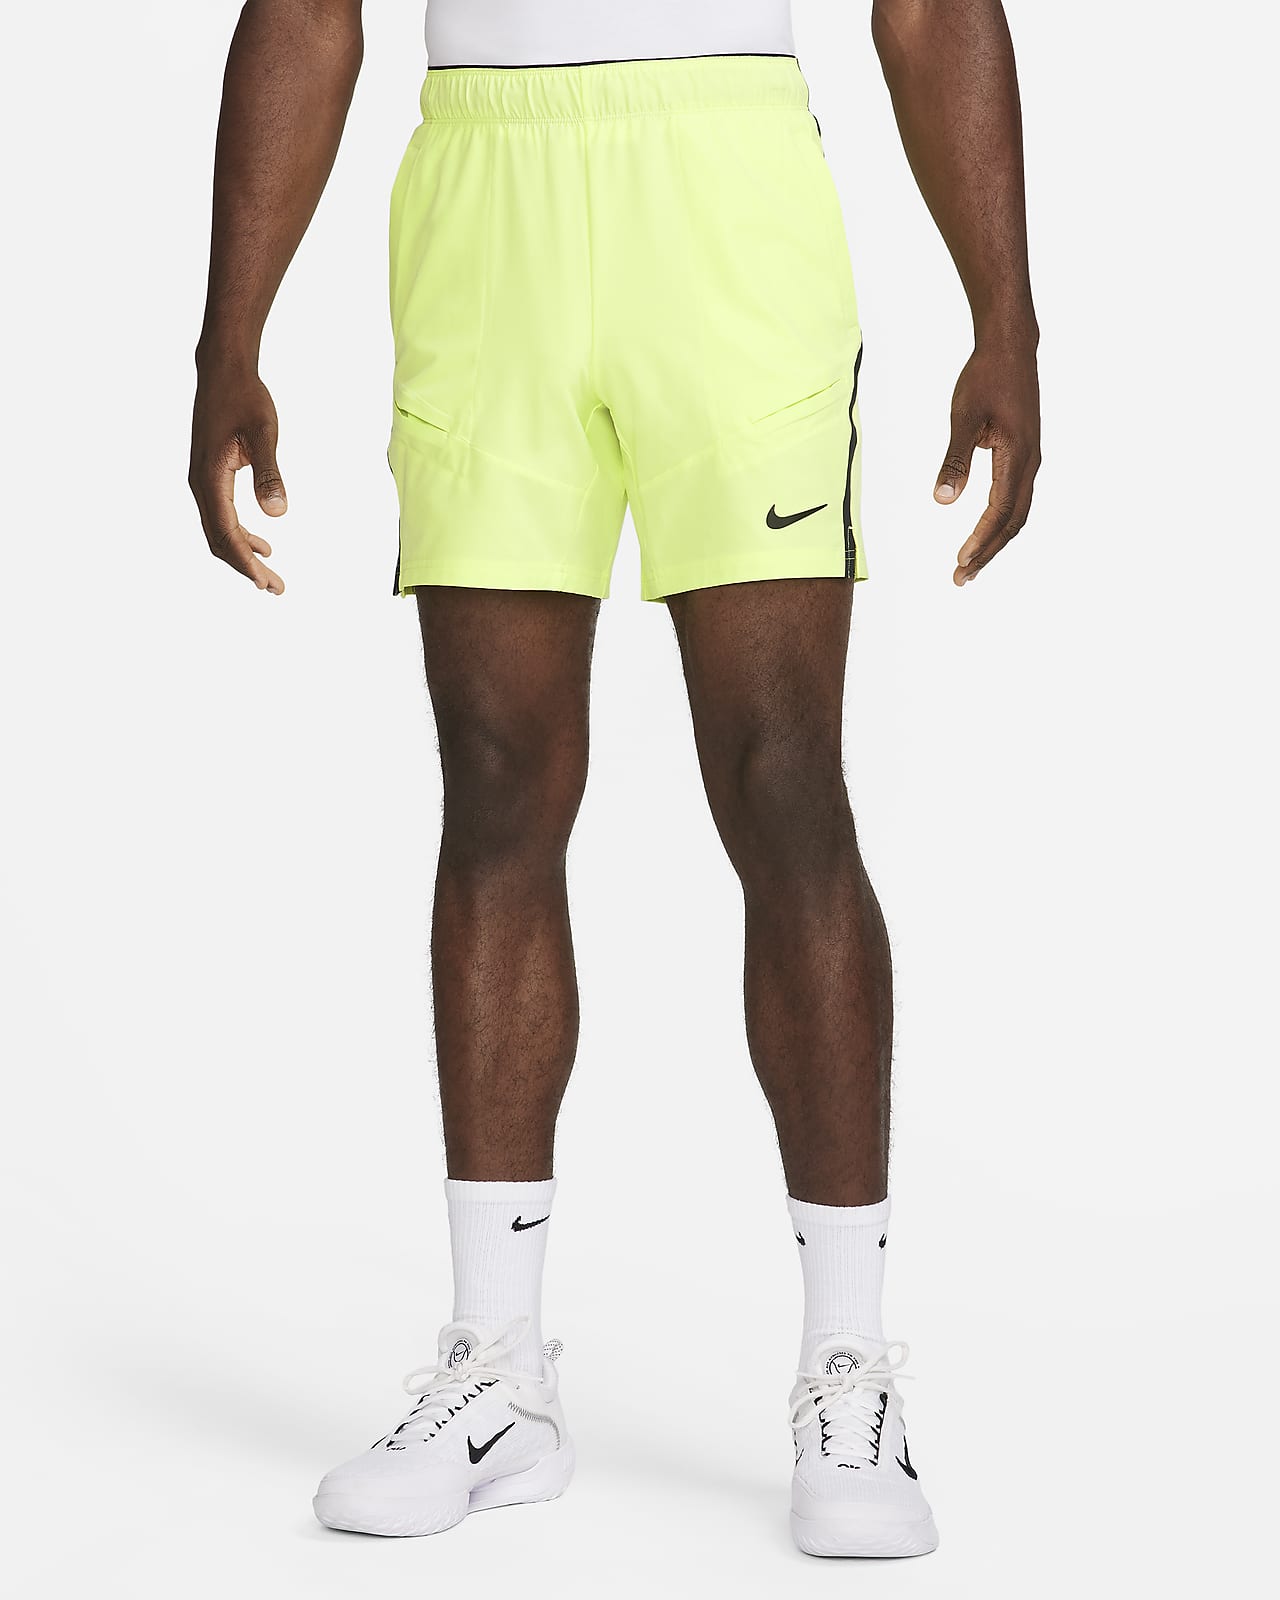 Calções de ténis de 18 cm Dri-FIT NikeCourt Advantage para homem